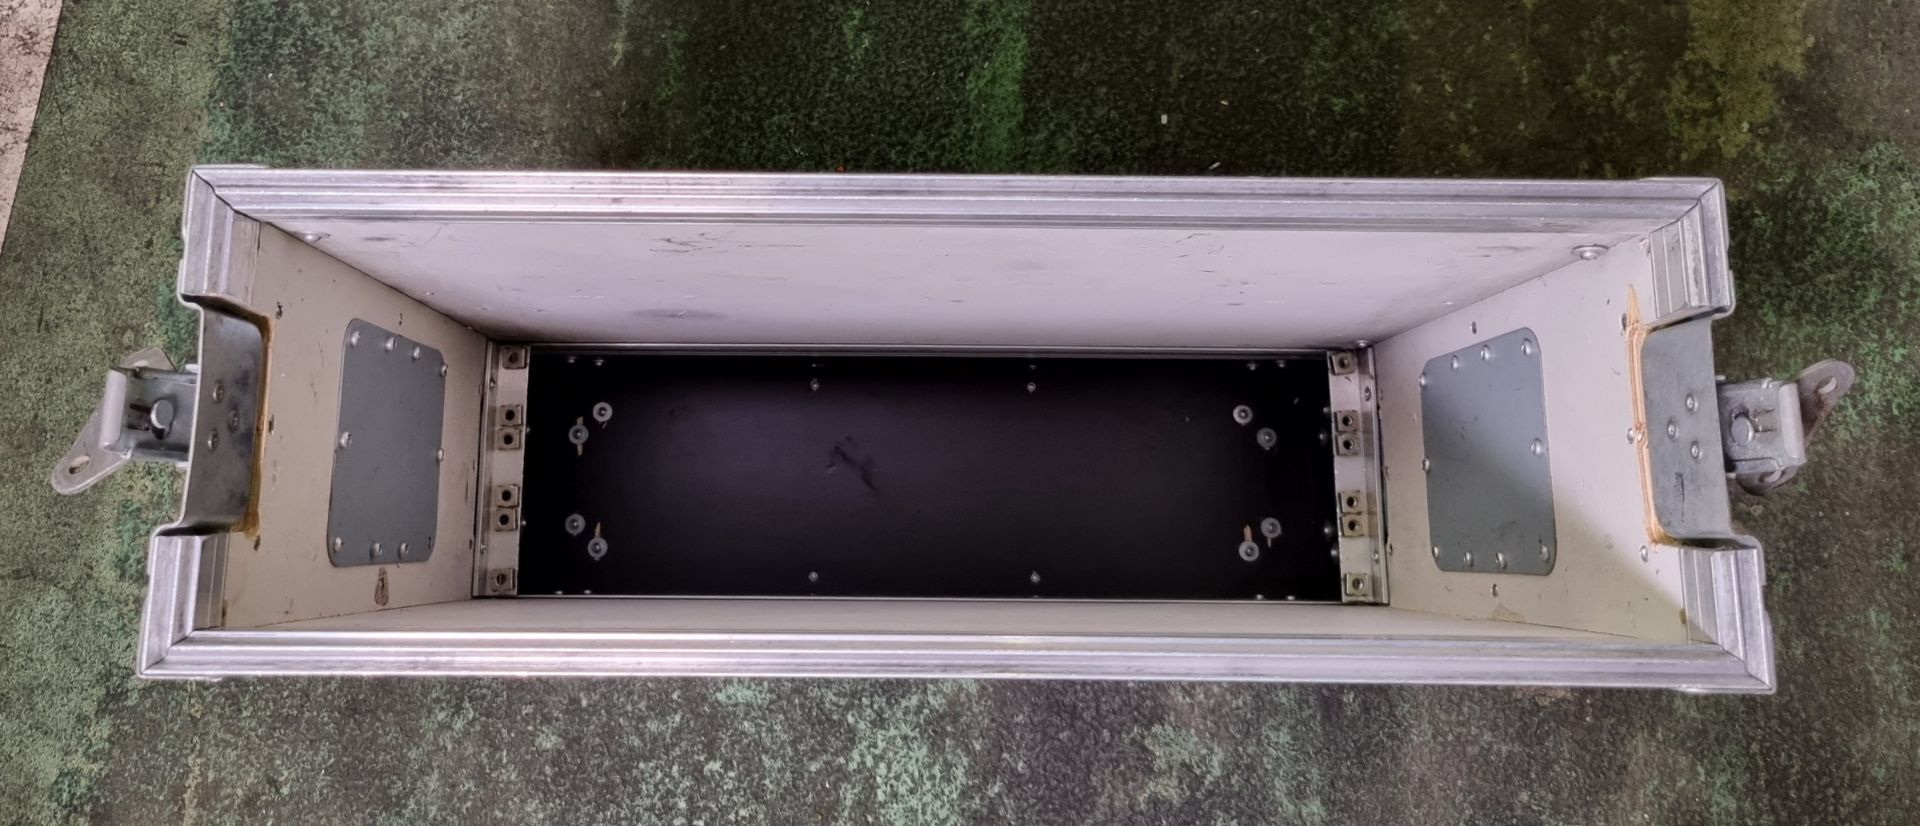 19 inch 3U rack mount flight case with rubber feet - W 625 x D 515 x H 165mm - Image 3 of 4